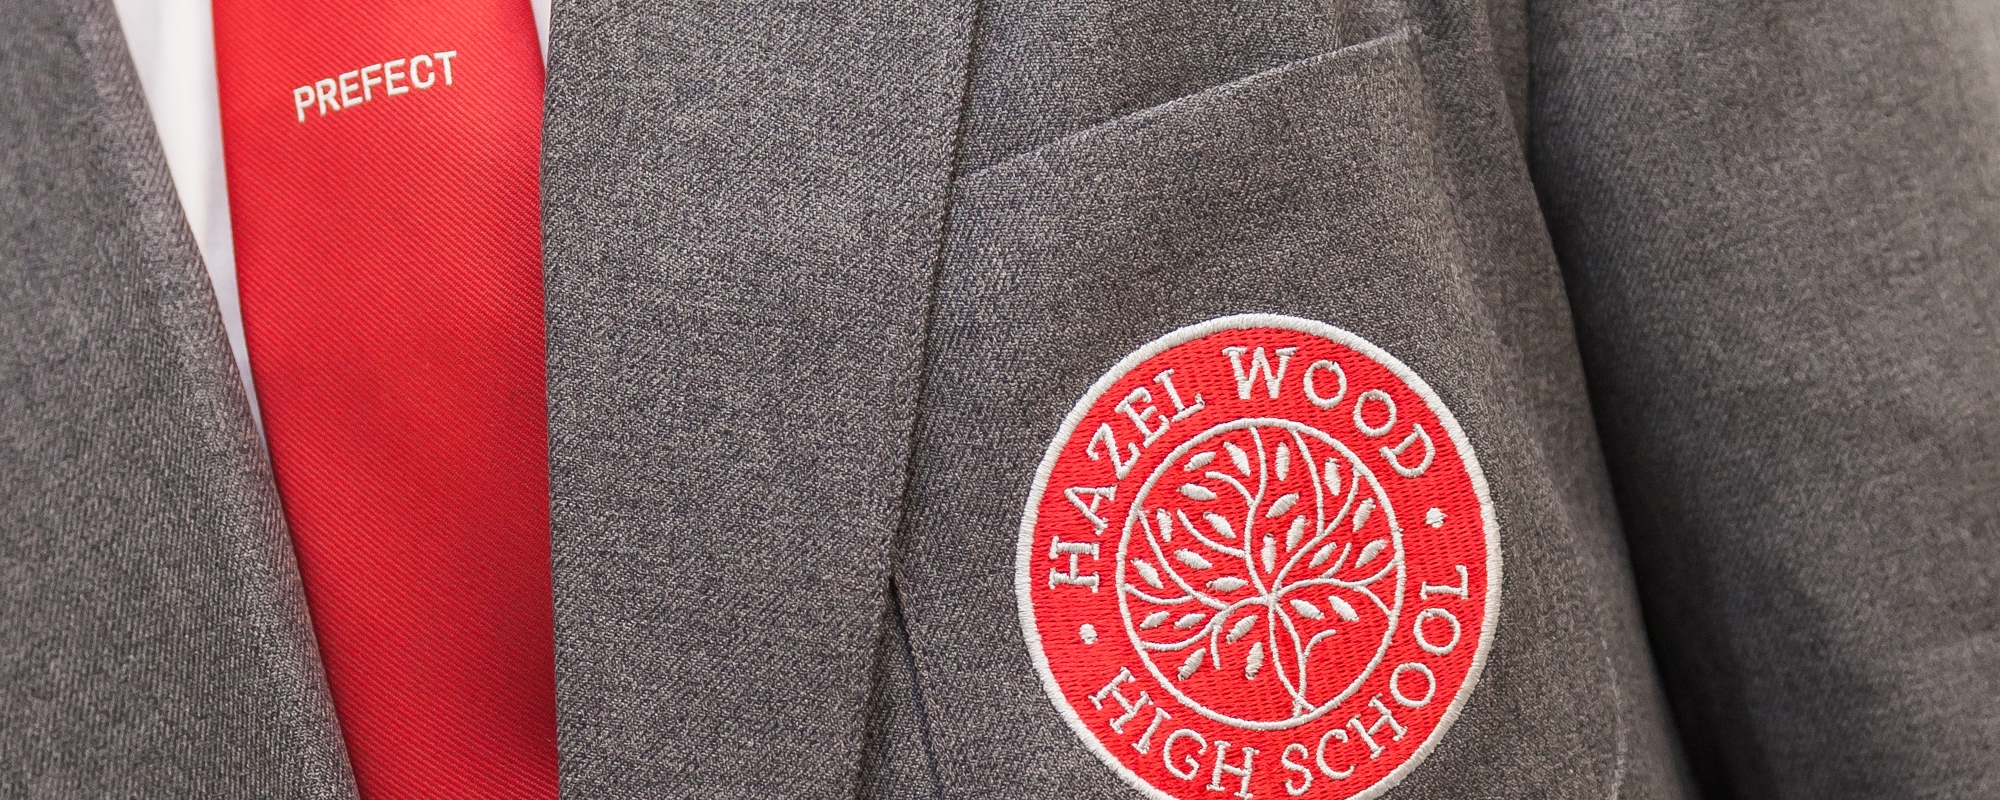 Hazel Wood High School uniform close up